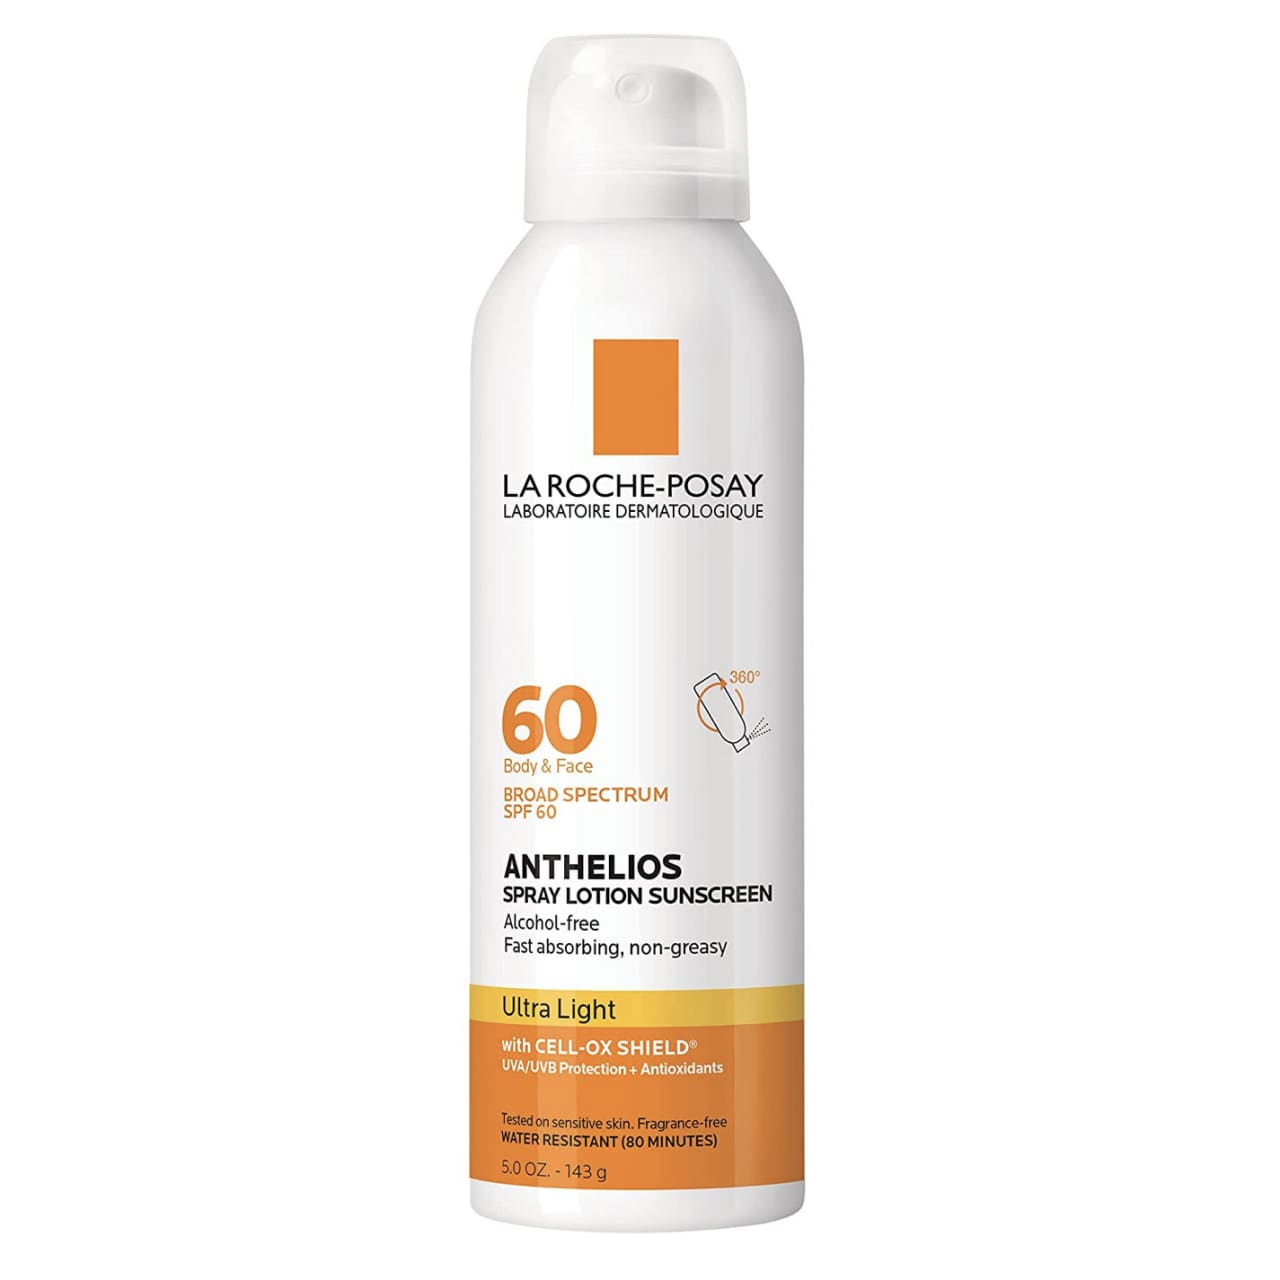 Anthelios Spray Lotion Sunscreen